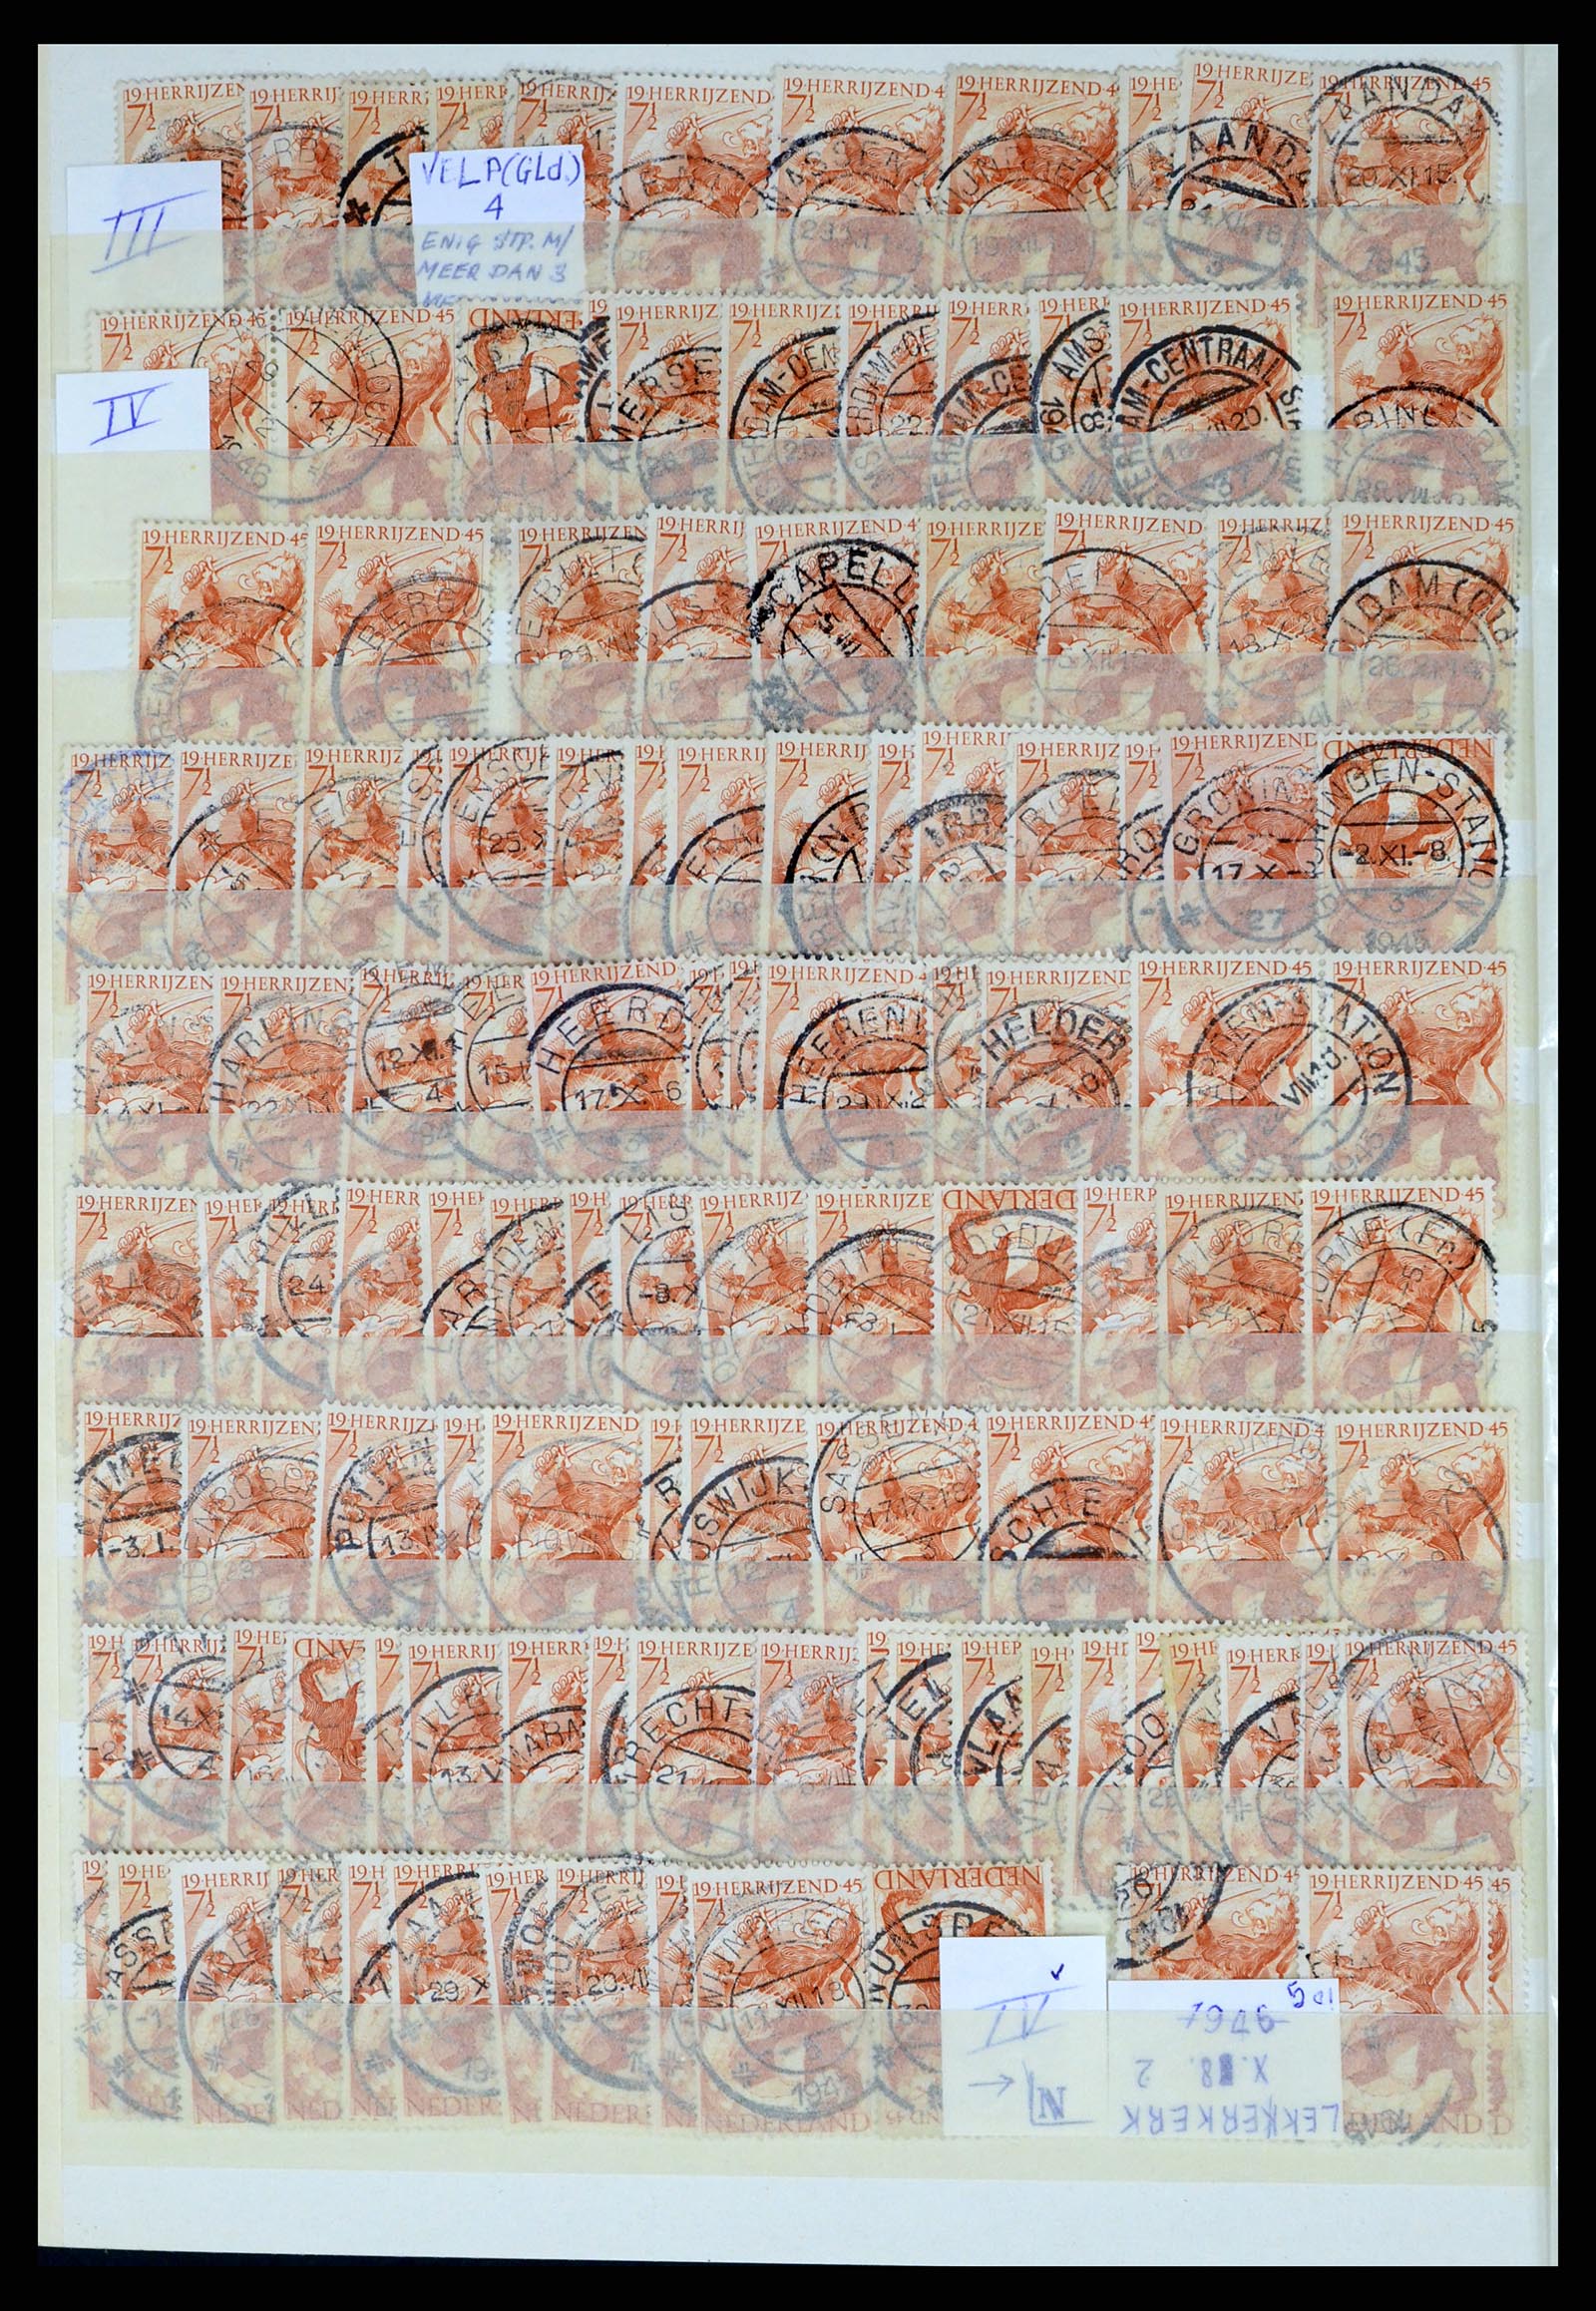 37424 042 - Stamp collection 37424 Netherlands shortbar cancels.